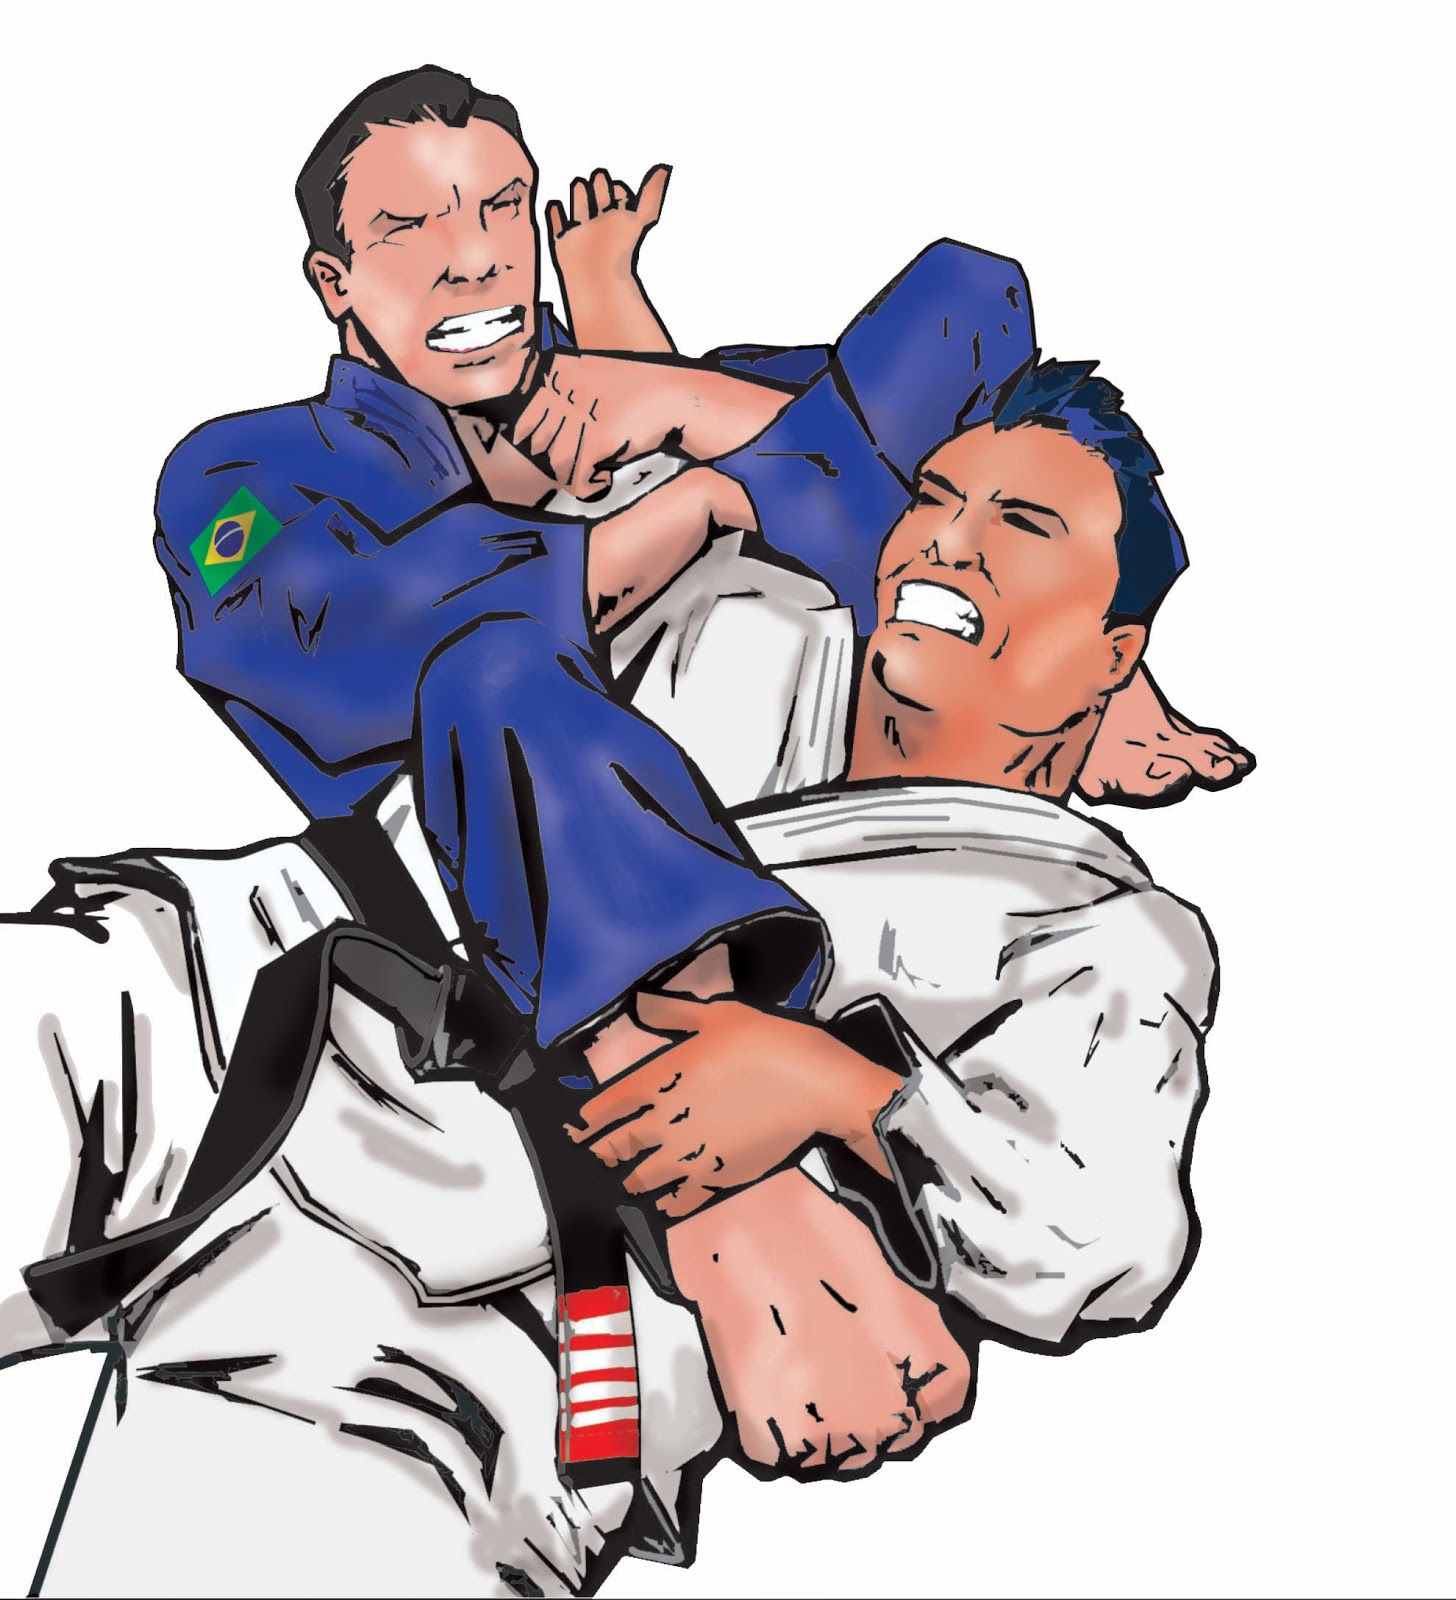 fond d'écran jiu jitsu,jiu jitsu brésilien,dessin animé,judo,illustration,arts martiaux